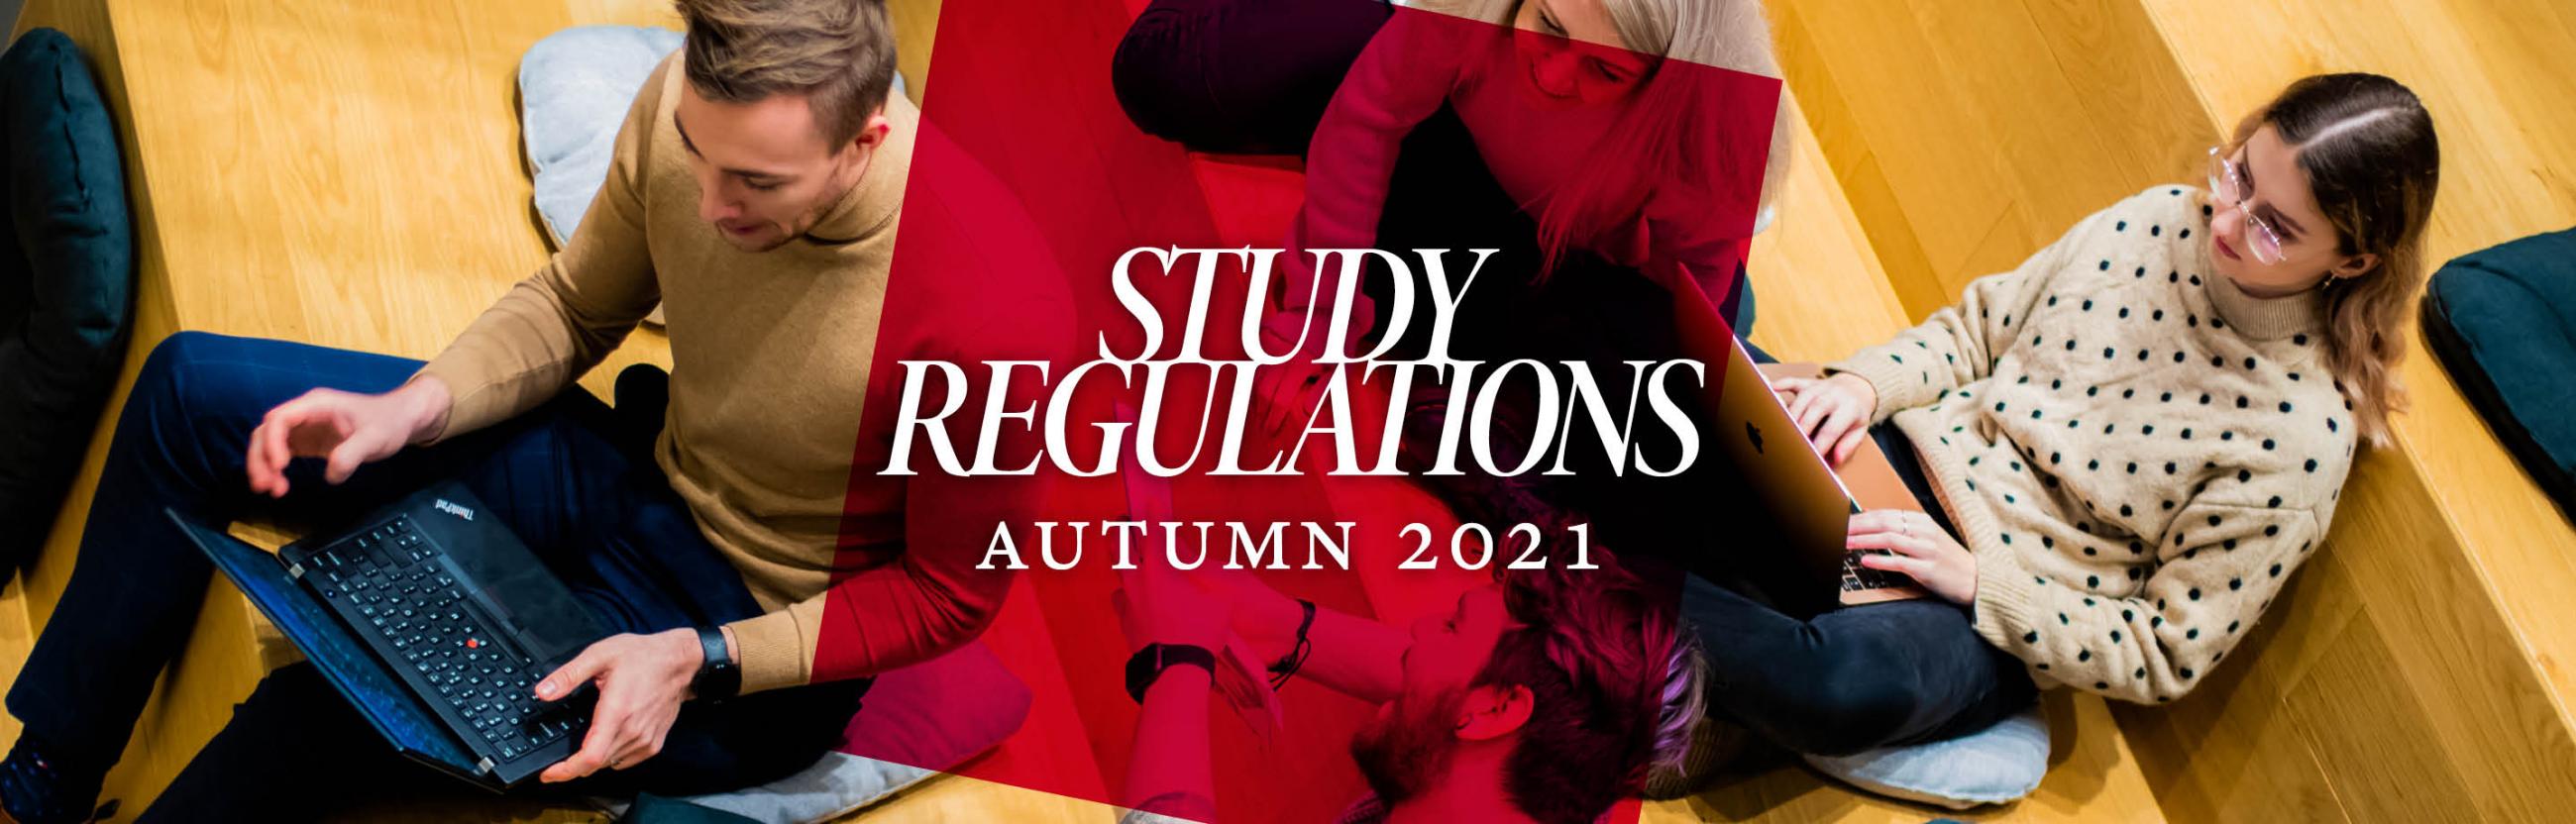 Study Regulations in Autumn 2021